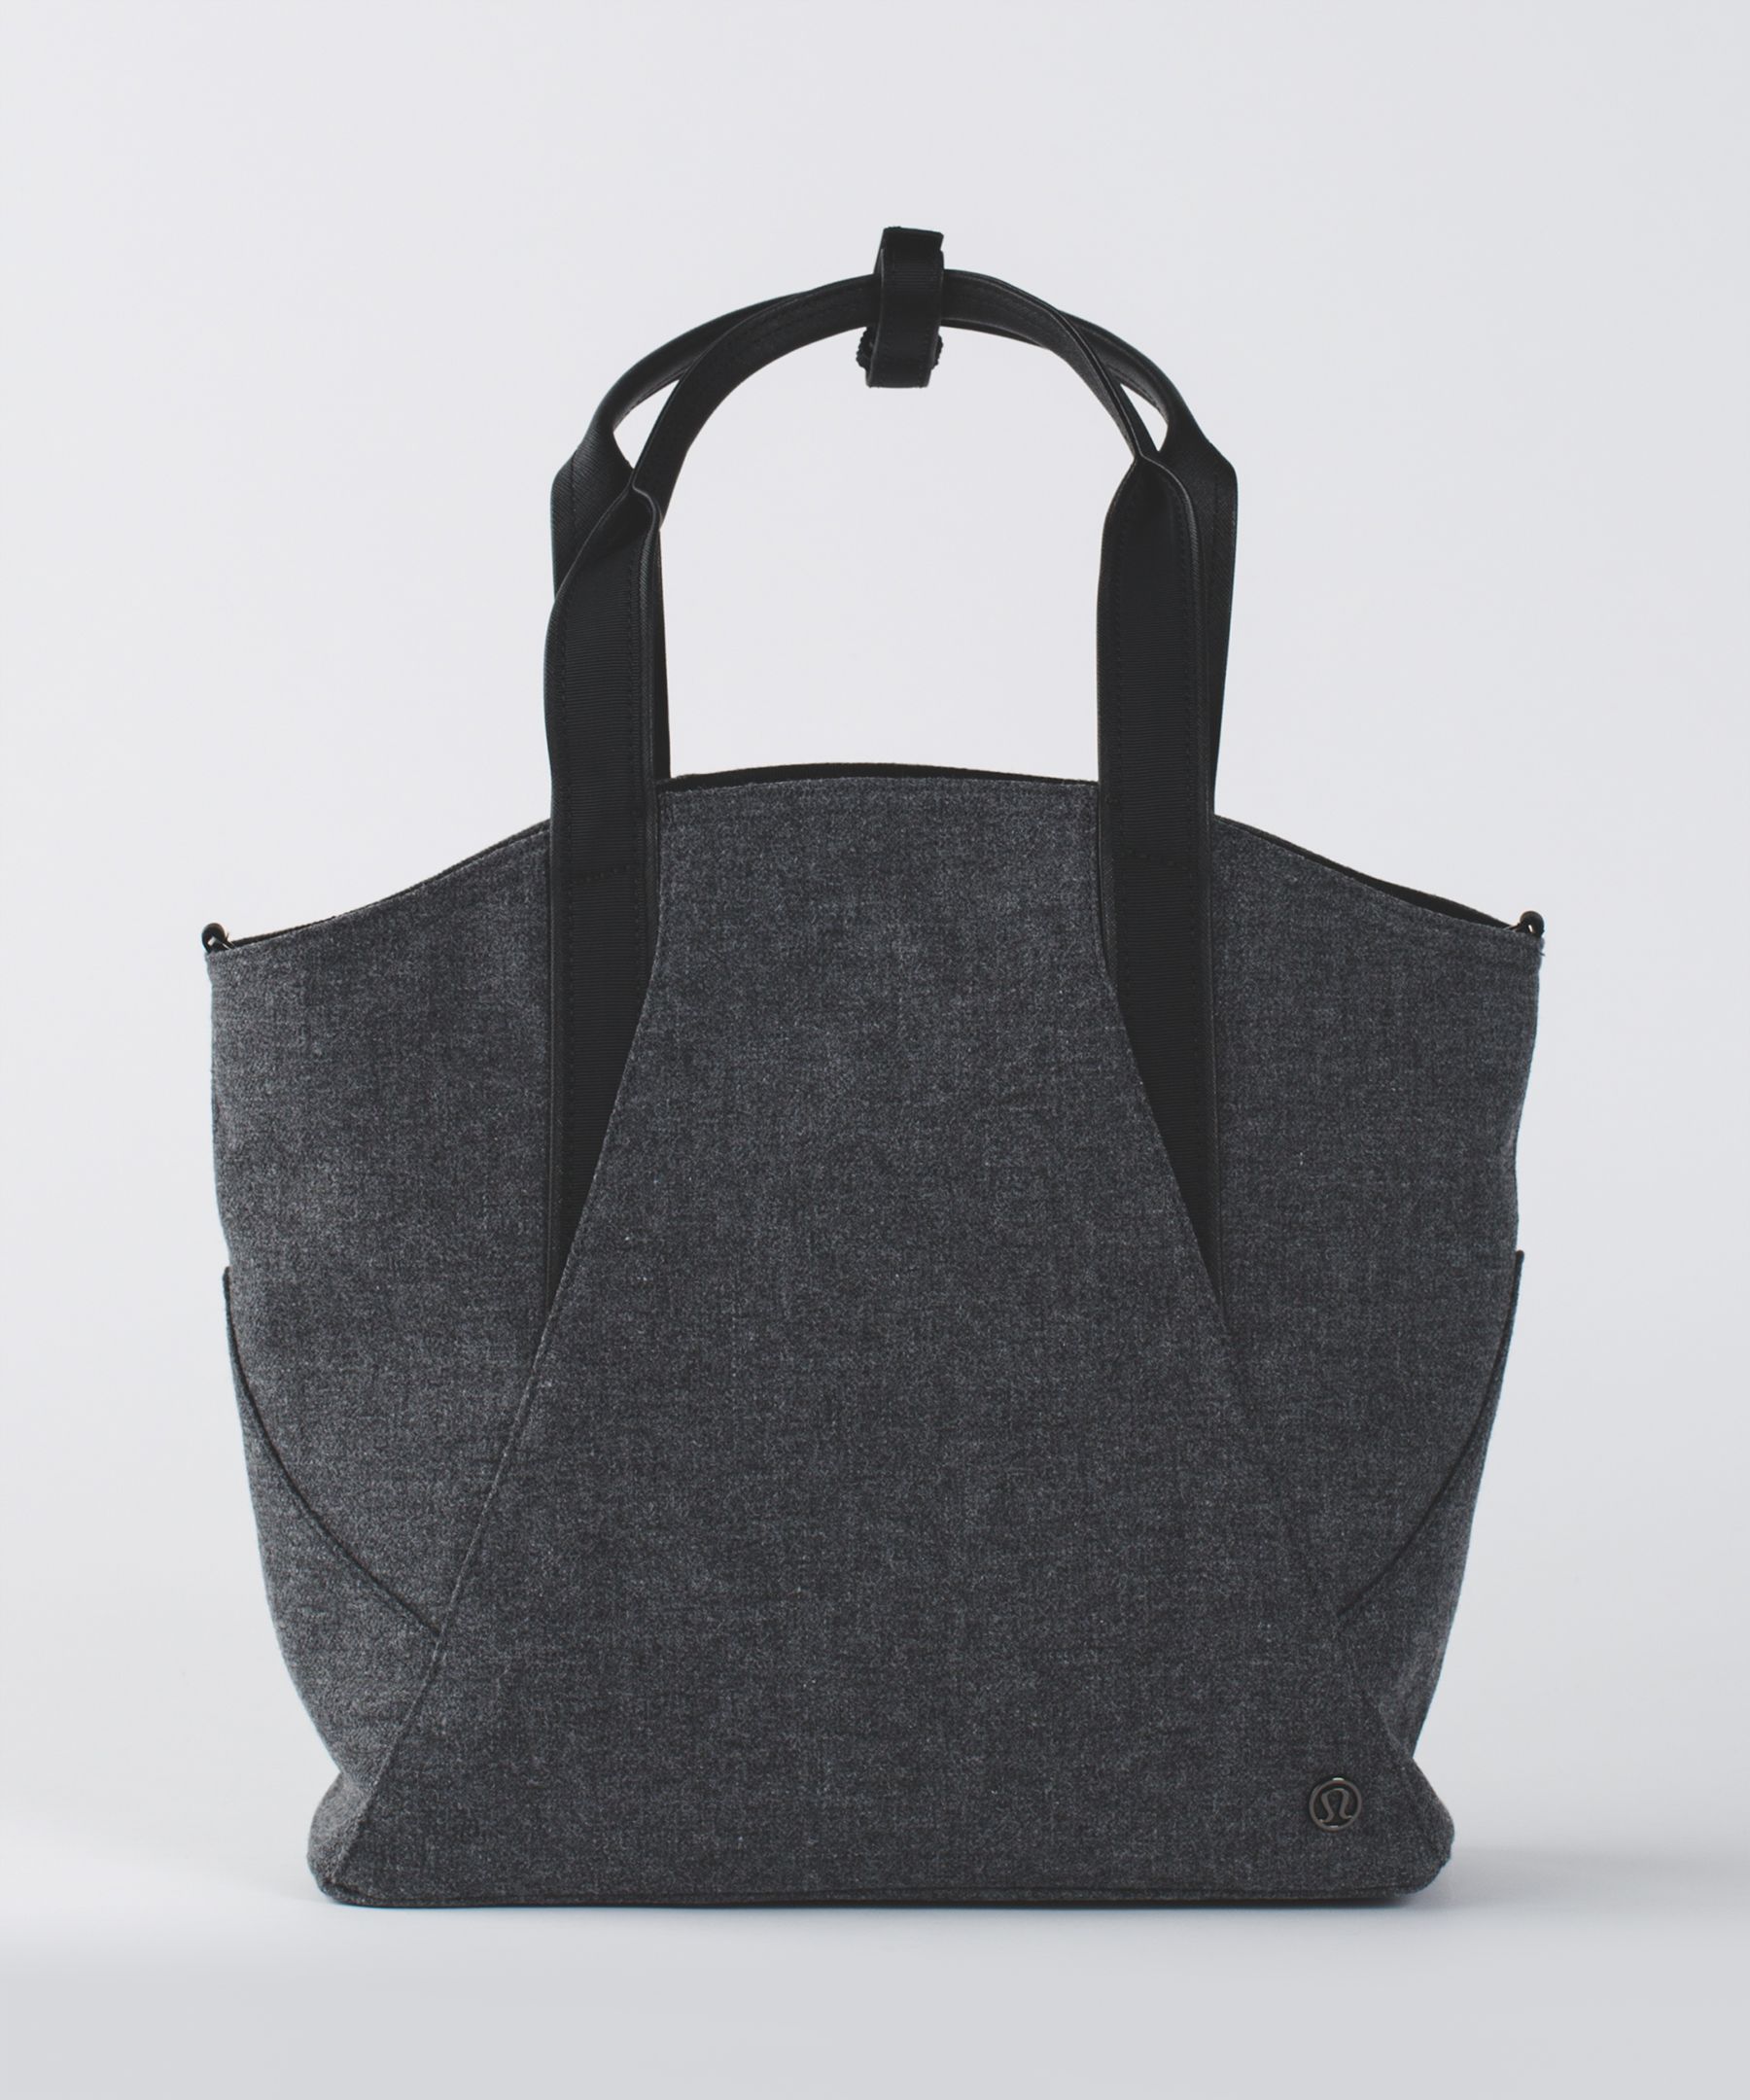 Lululemon Reusable Shopping Tote Bag Large Light Gray & Off White Tote